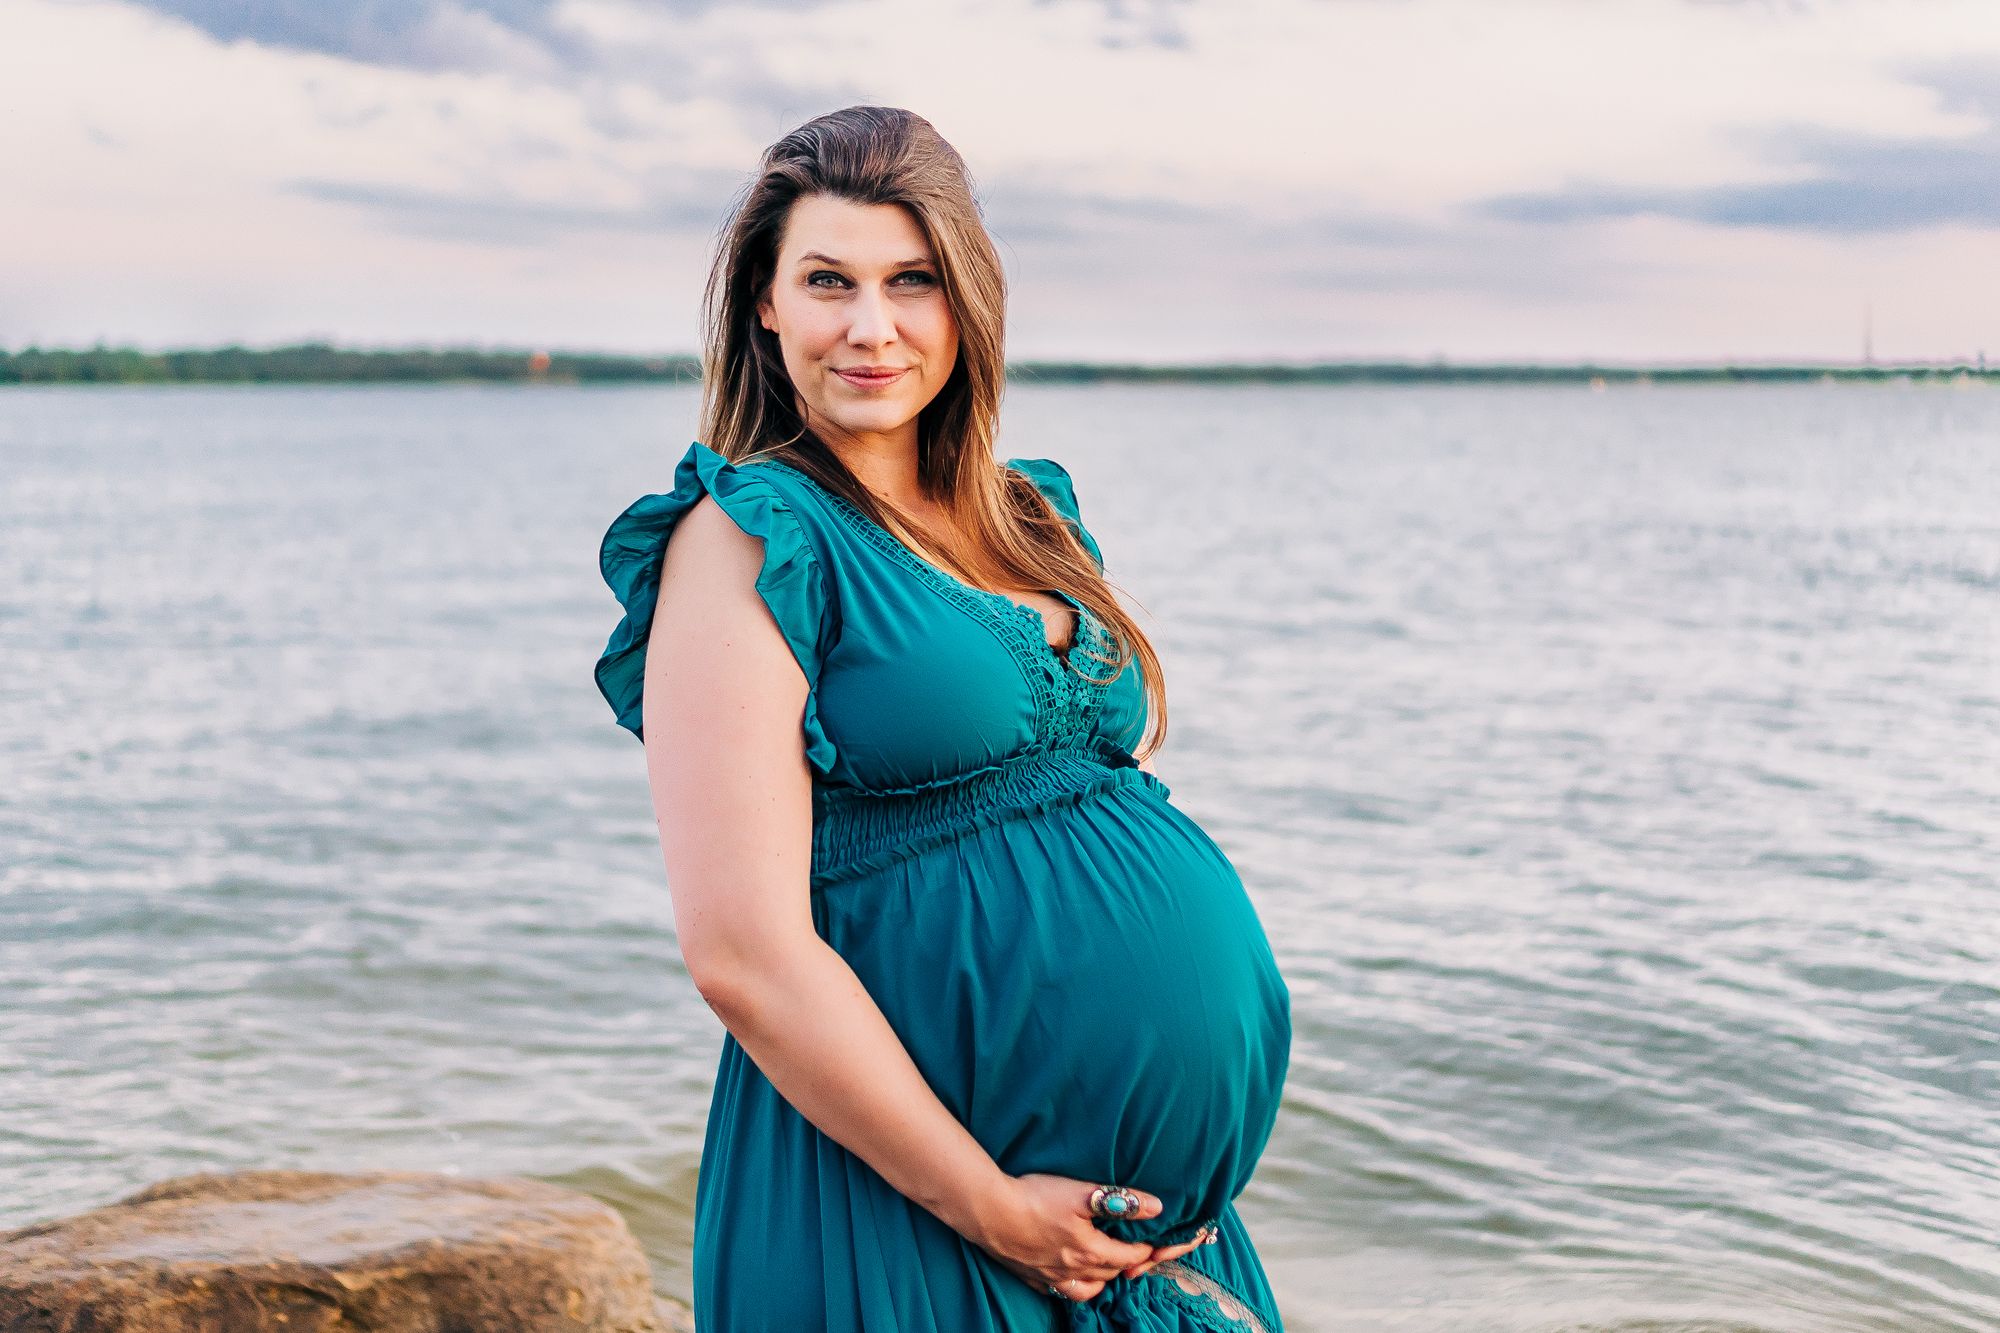 How to pose for maternity photos | Family Maternity Session | Dallas, Texas Photographer | via brittnierenee.com